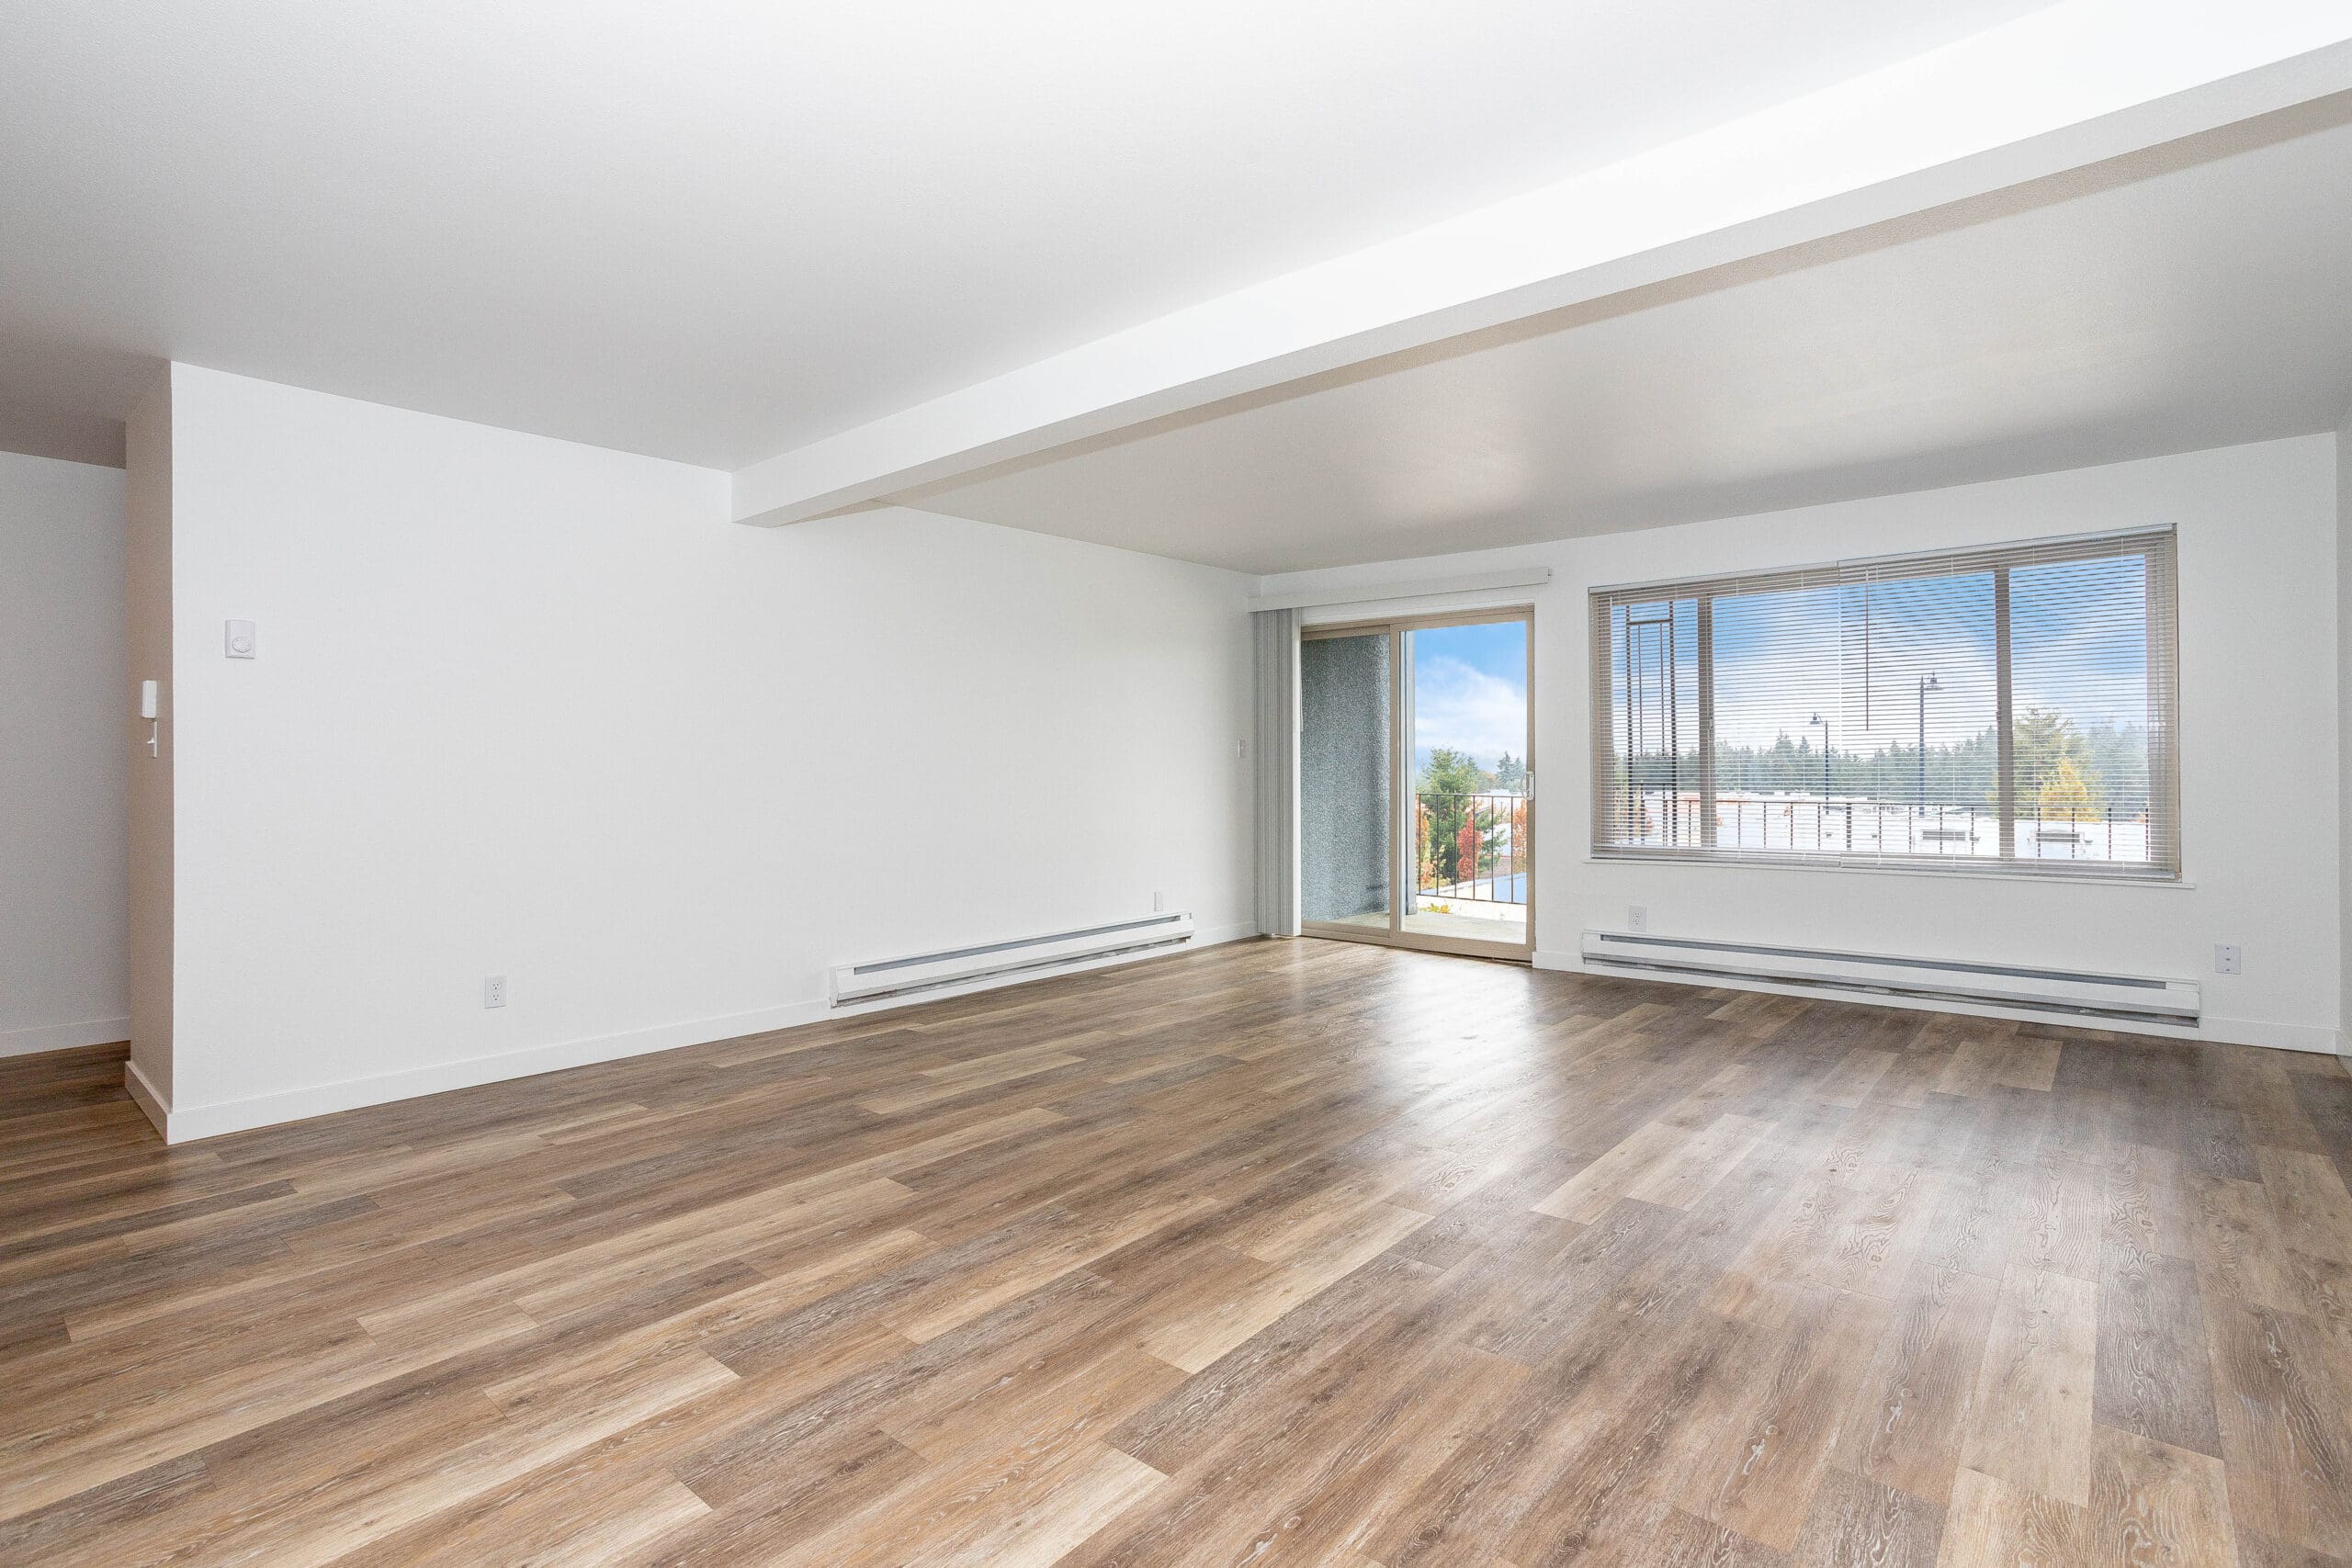 Studios in Shoreline WA - Octavia - Living Room Area with Wood Floors, Window, and Balcony Access